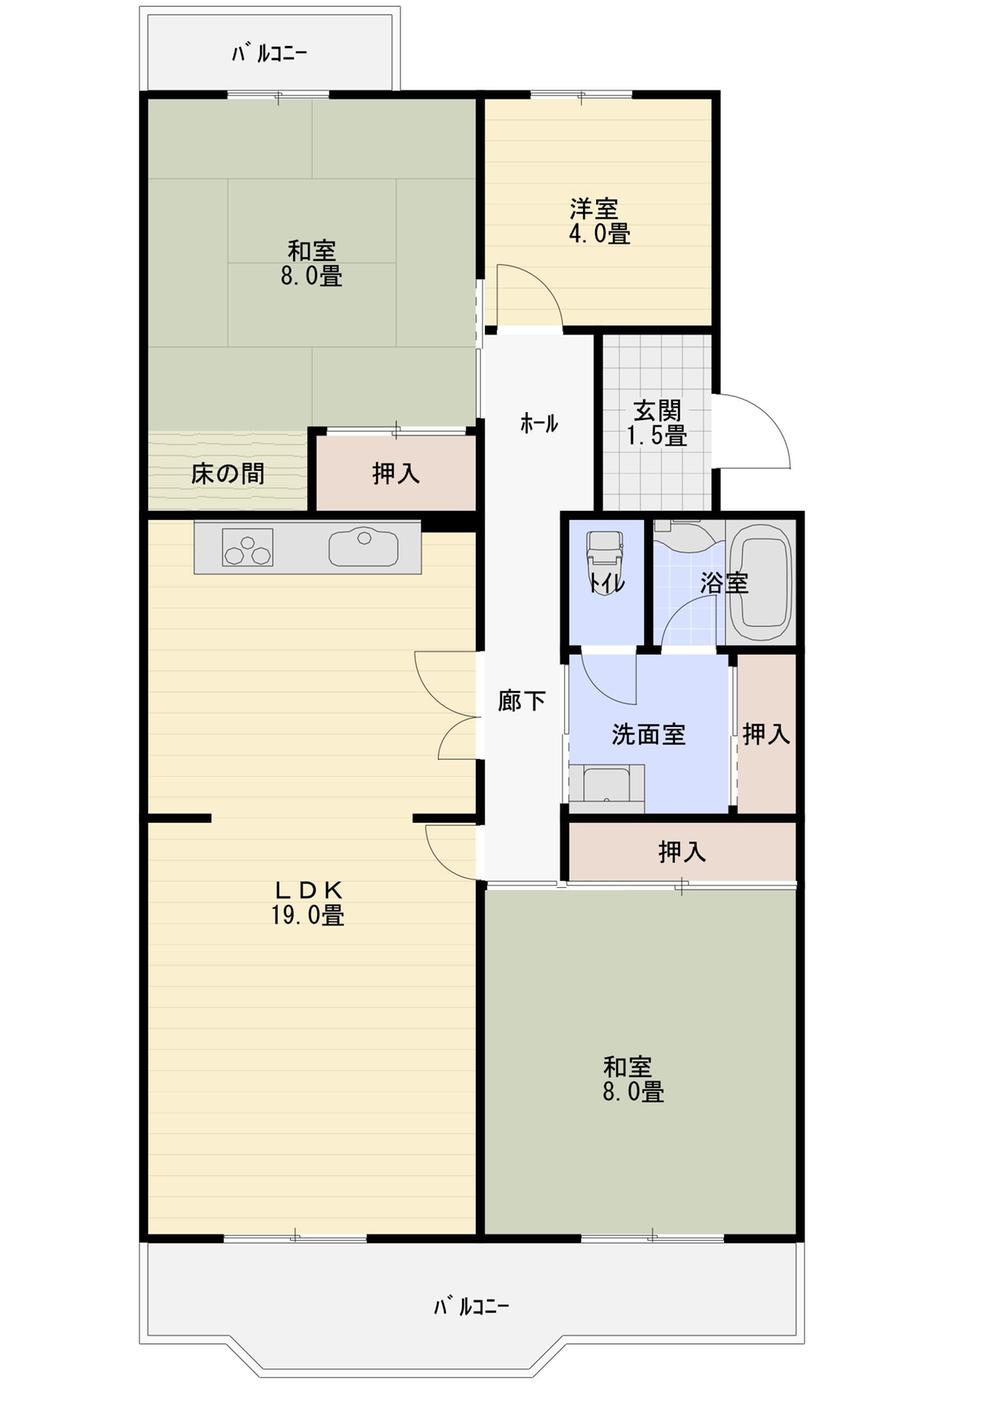 Floor plan. 3LDK, Price 5.5 million yen, Footprint 87.3 sq m , Balcony area 16.8 sq m floor plan